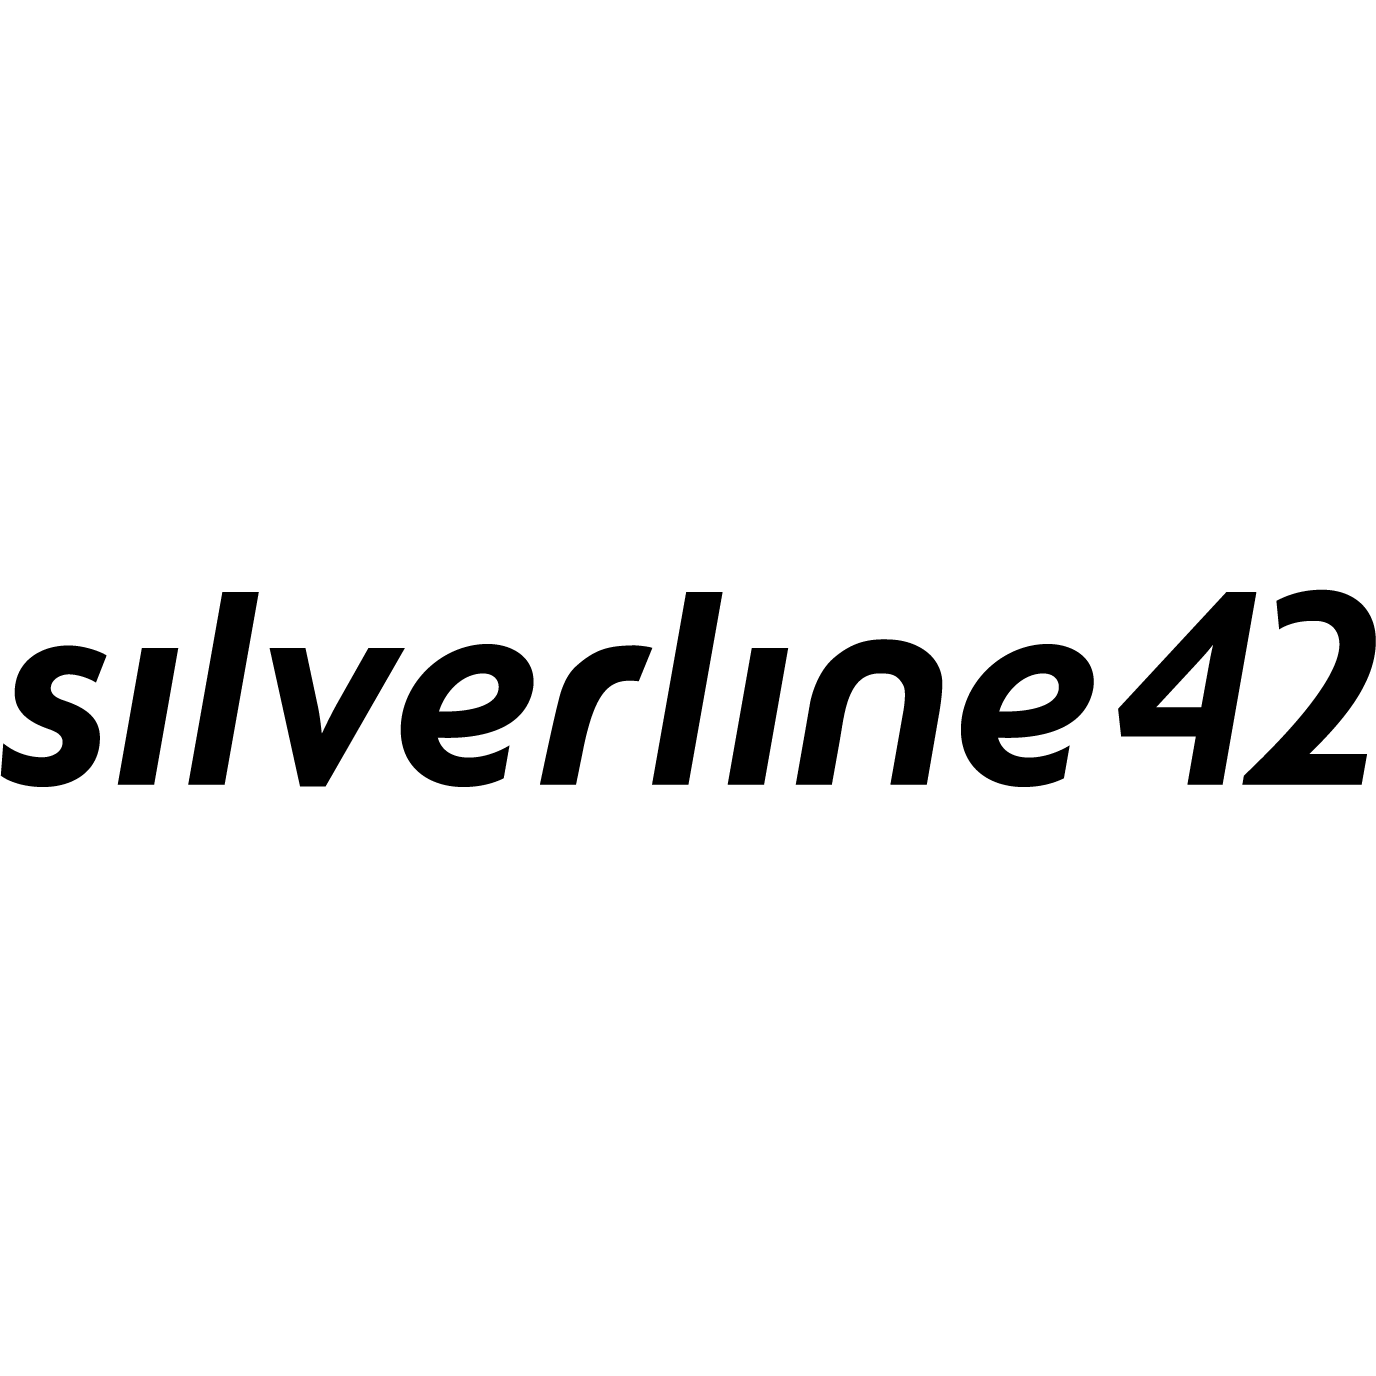 silverline42 gmbh Logo